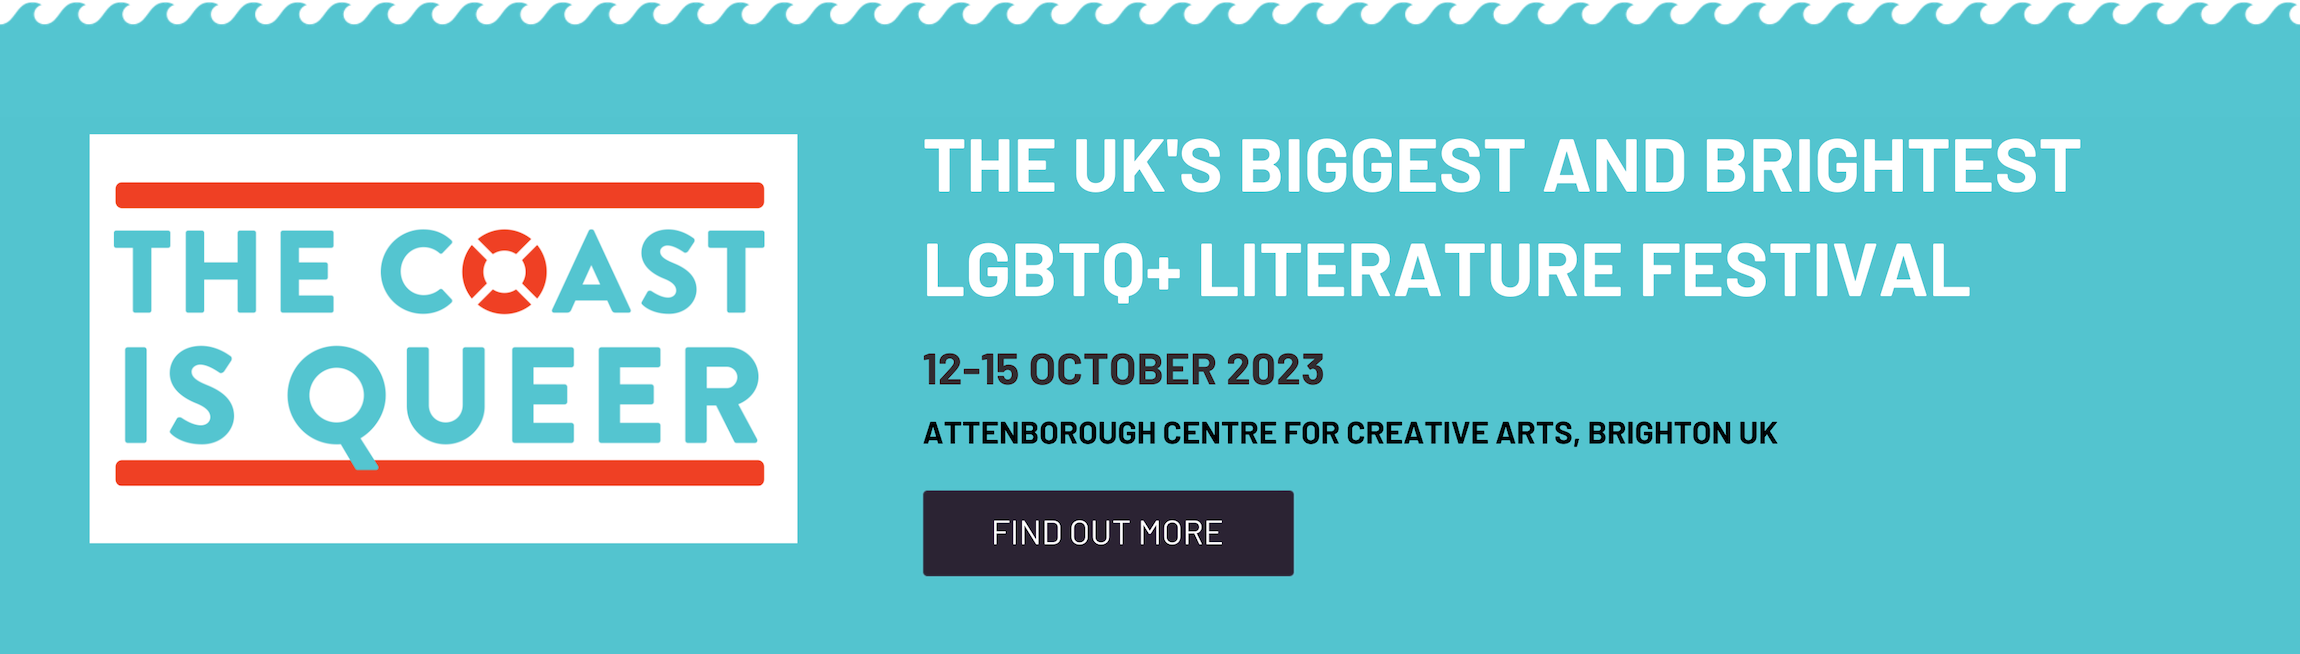 THE UK'S BIGGEST AND BRIGHTEST LGBTQ+ LITERATURE FESTIVAL-2